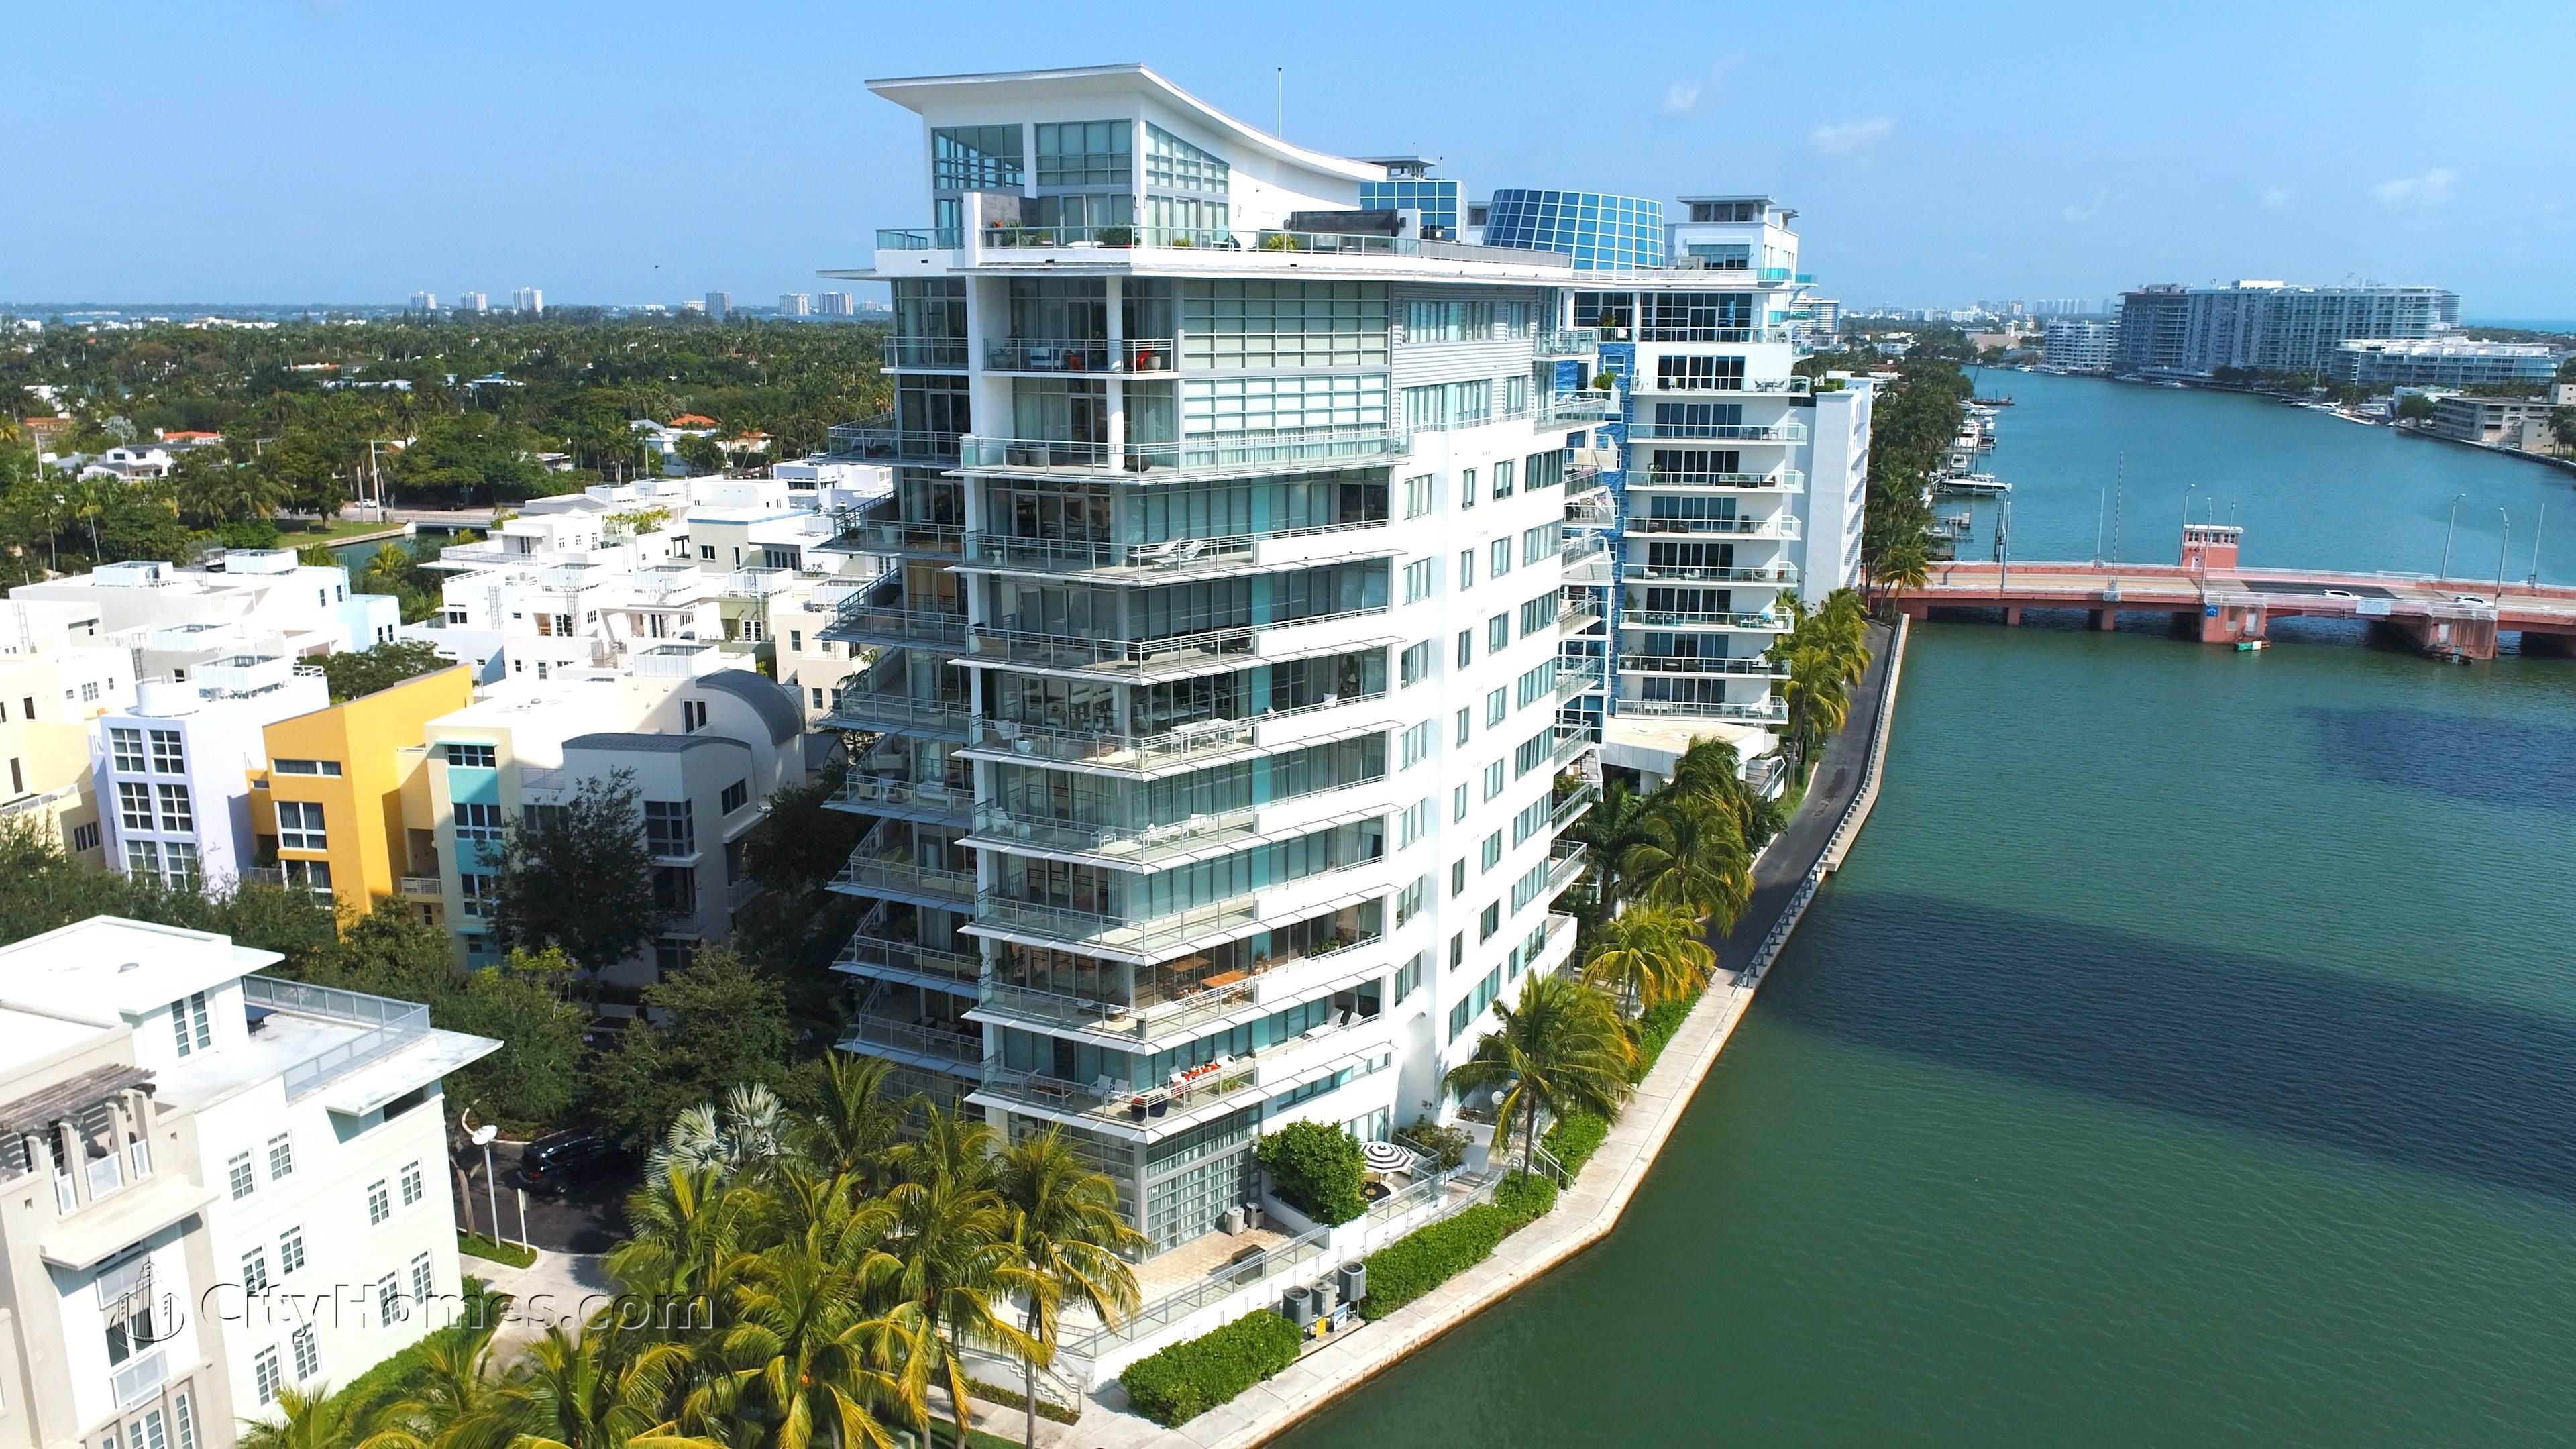 6101 Aqua Avenue, Miami Beach, FL 33141에 AQUA ALLISON ISLAND - GORLIN BUILDING 건물